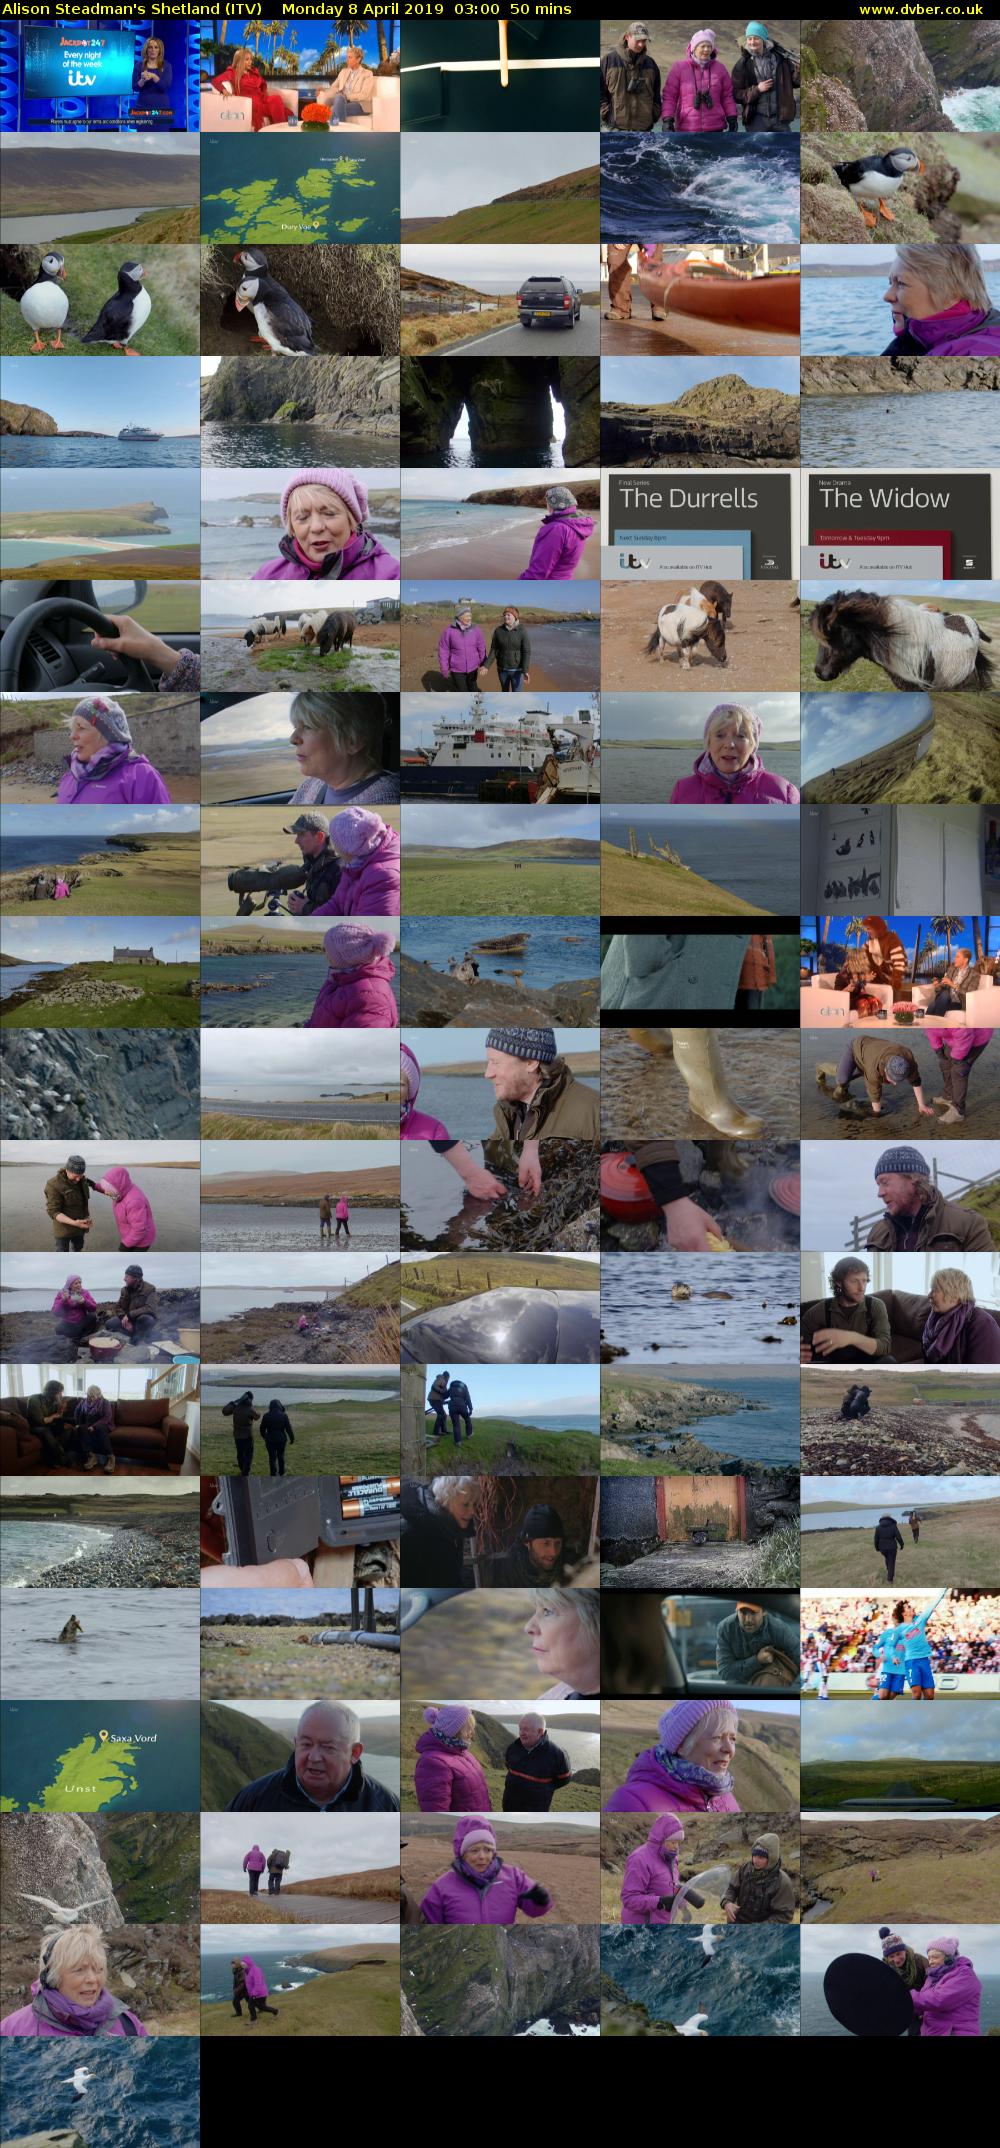 Alison Steadman's Shetland (ITV) Monday 8 April 2019 03:00 - 03:50